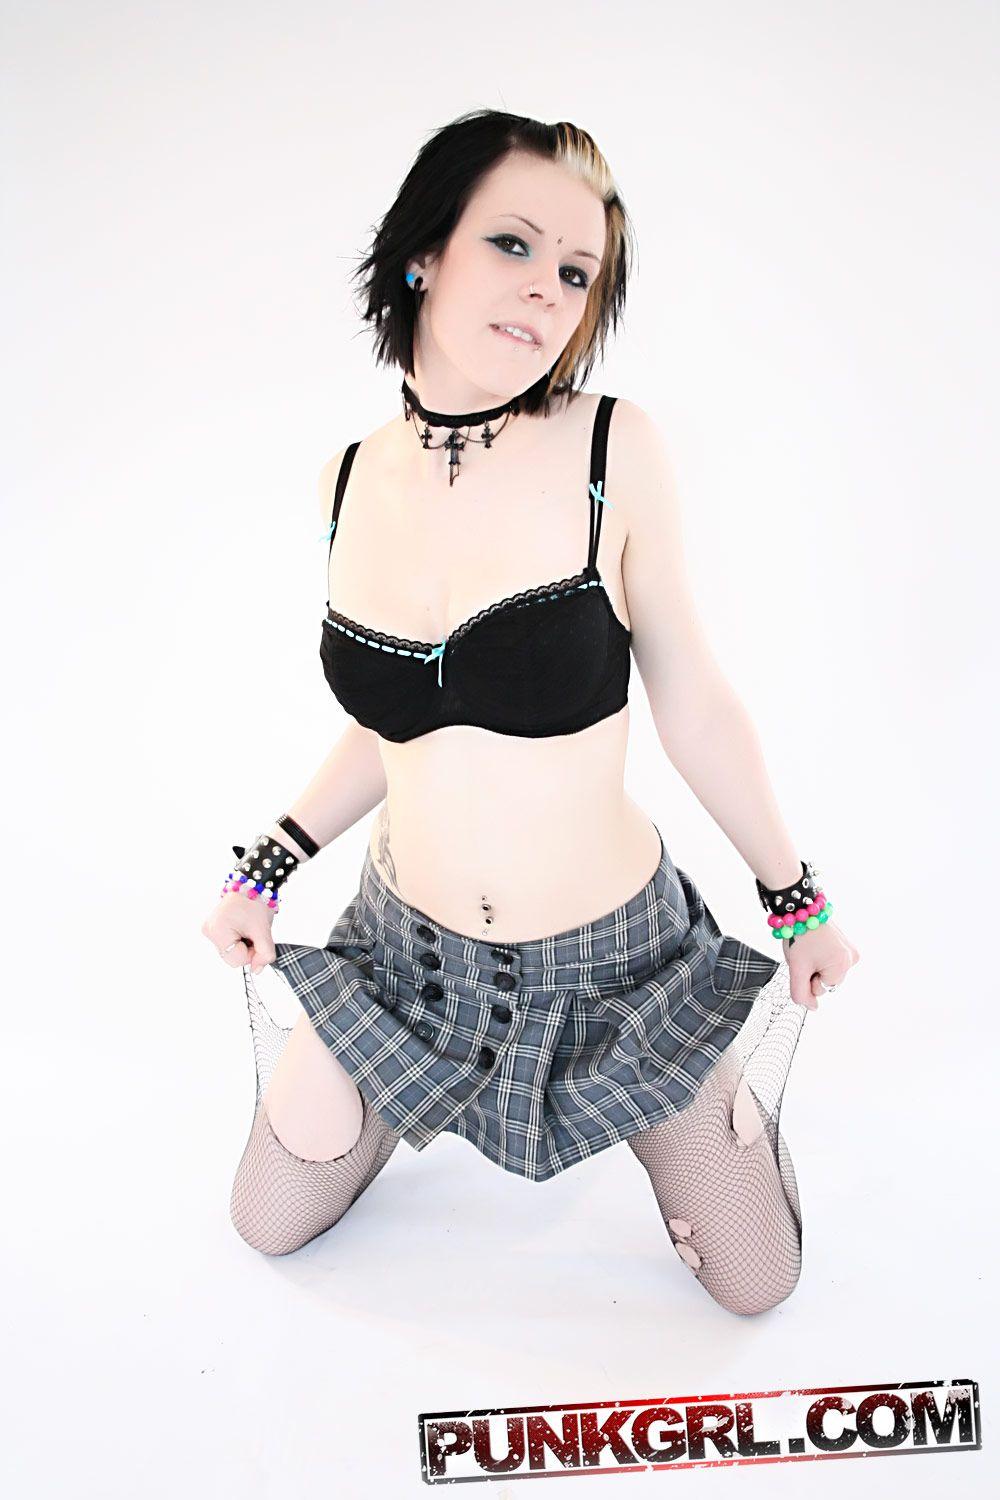 Pictures of teen punk Sky being a naughty schoolgirl #60763983